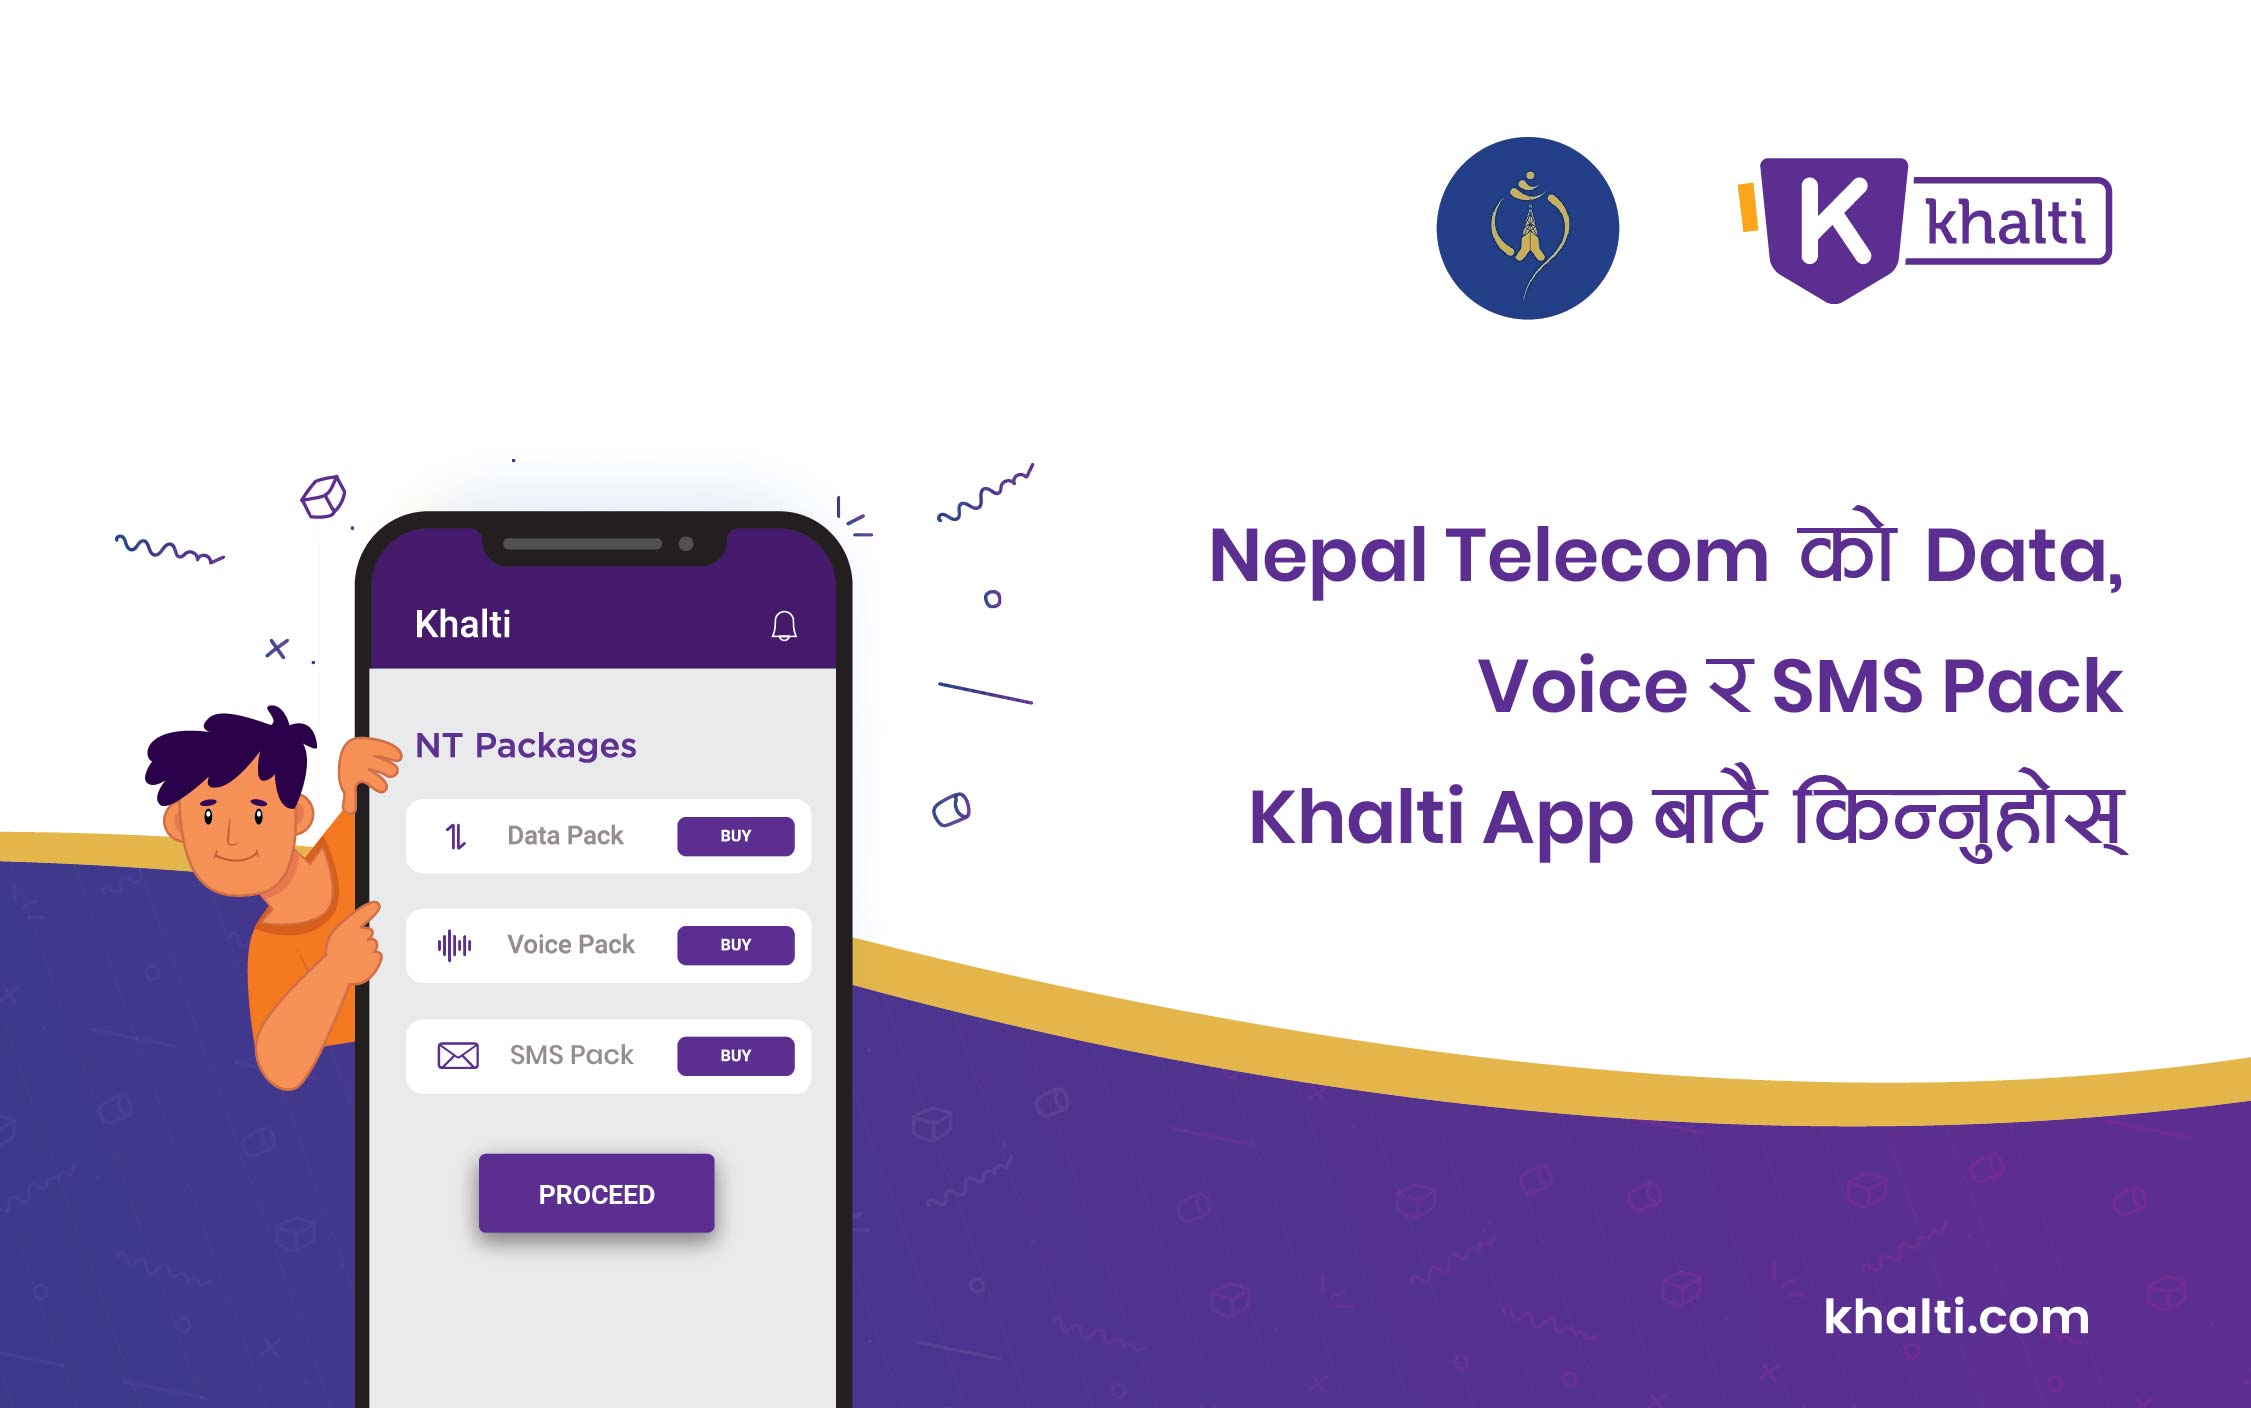 Buy NTC Mobile Data Packs directly from Khalti App!